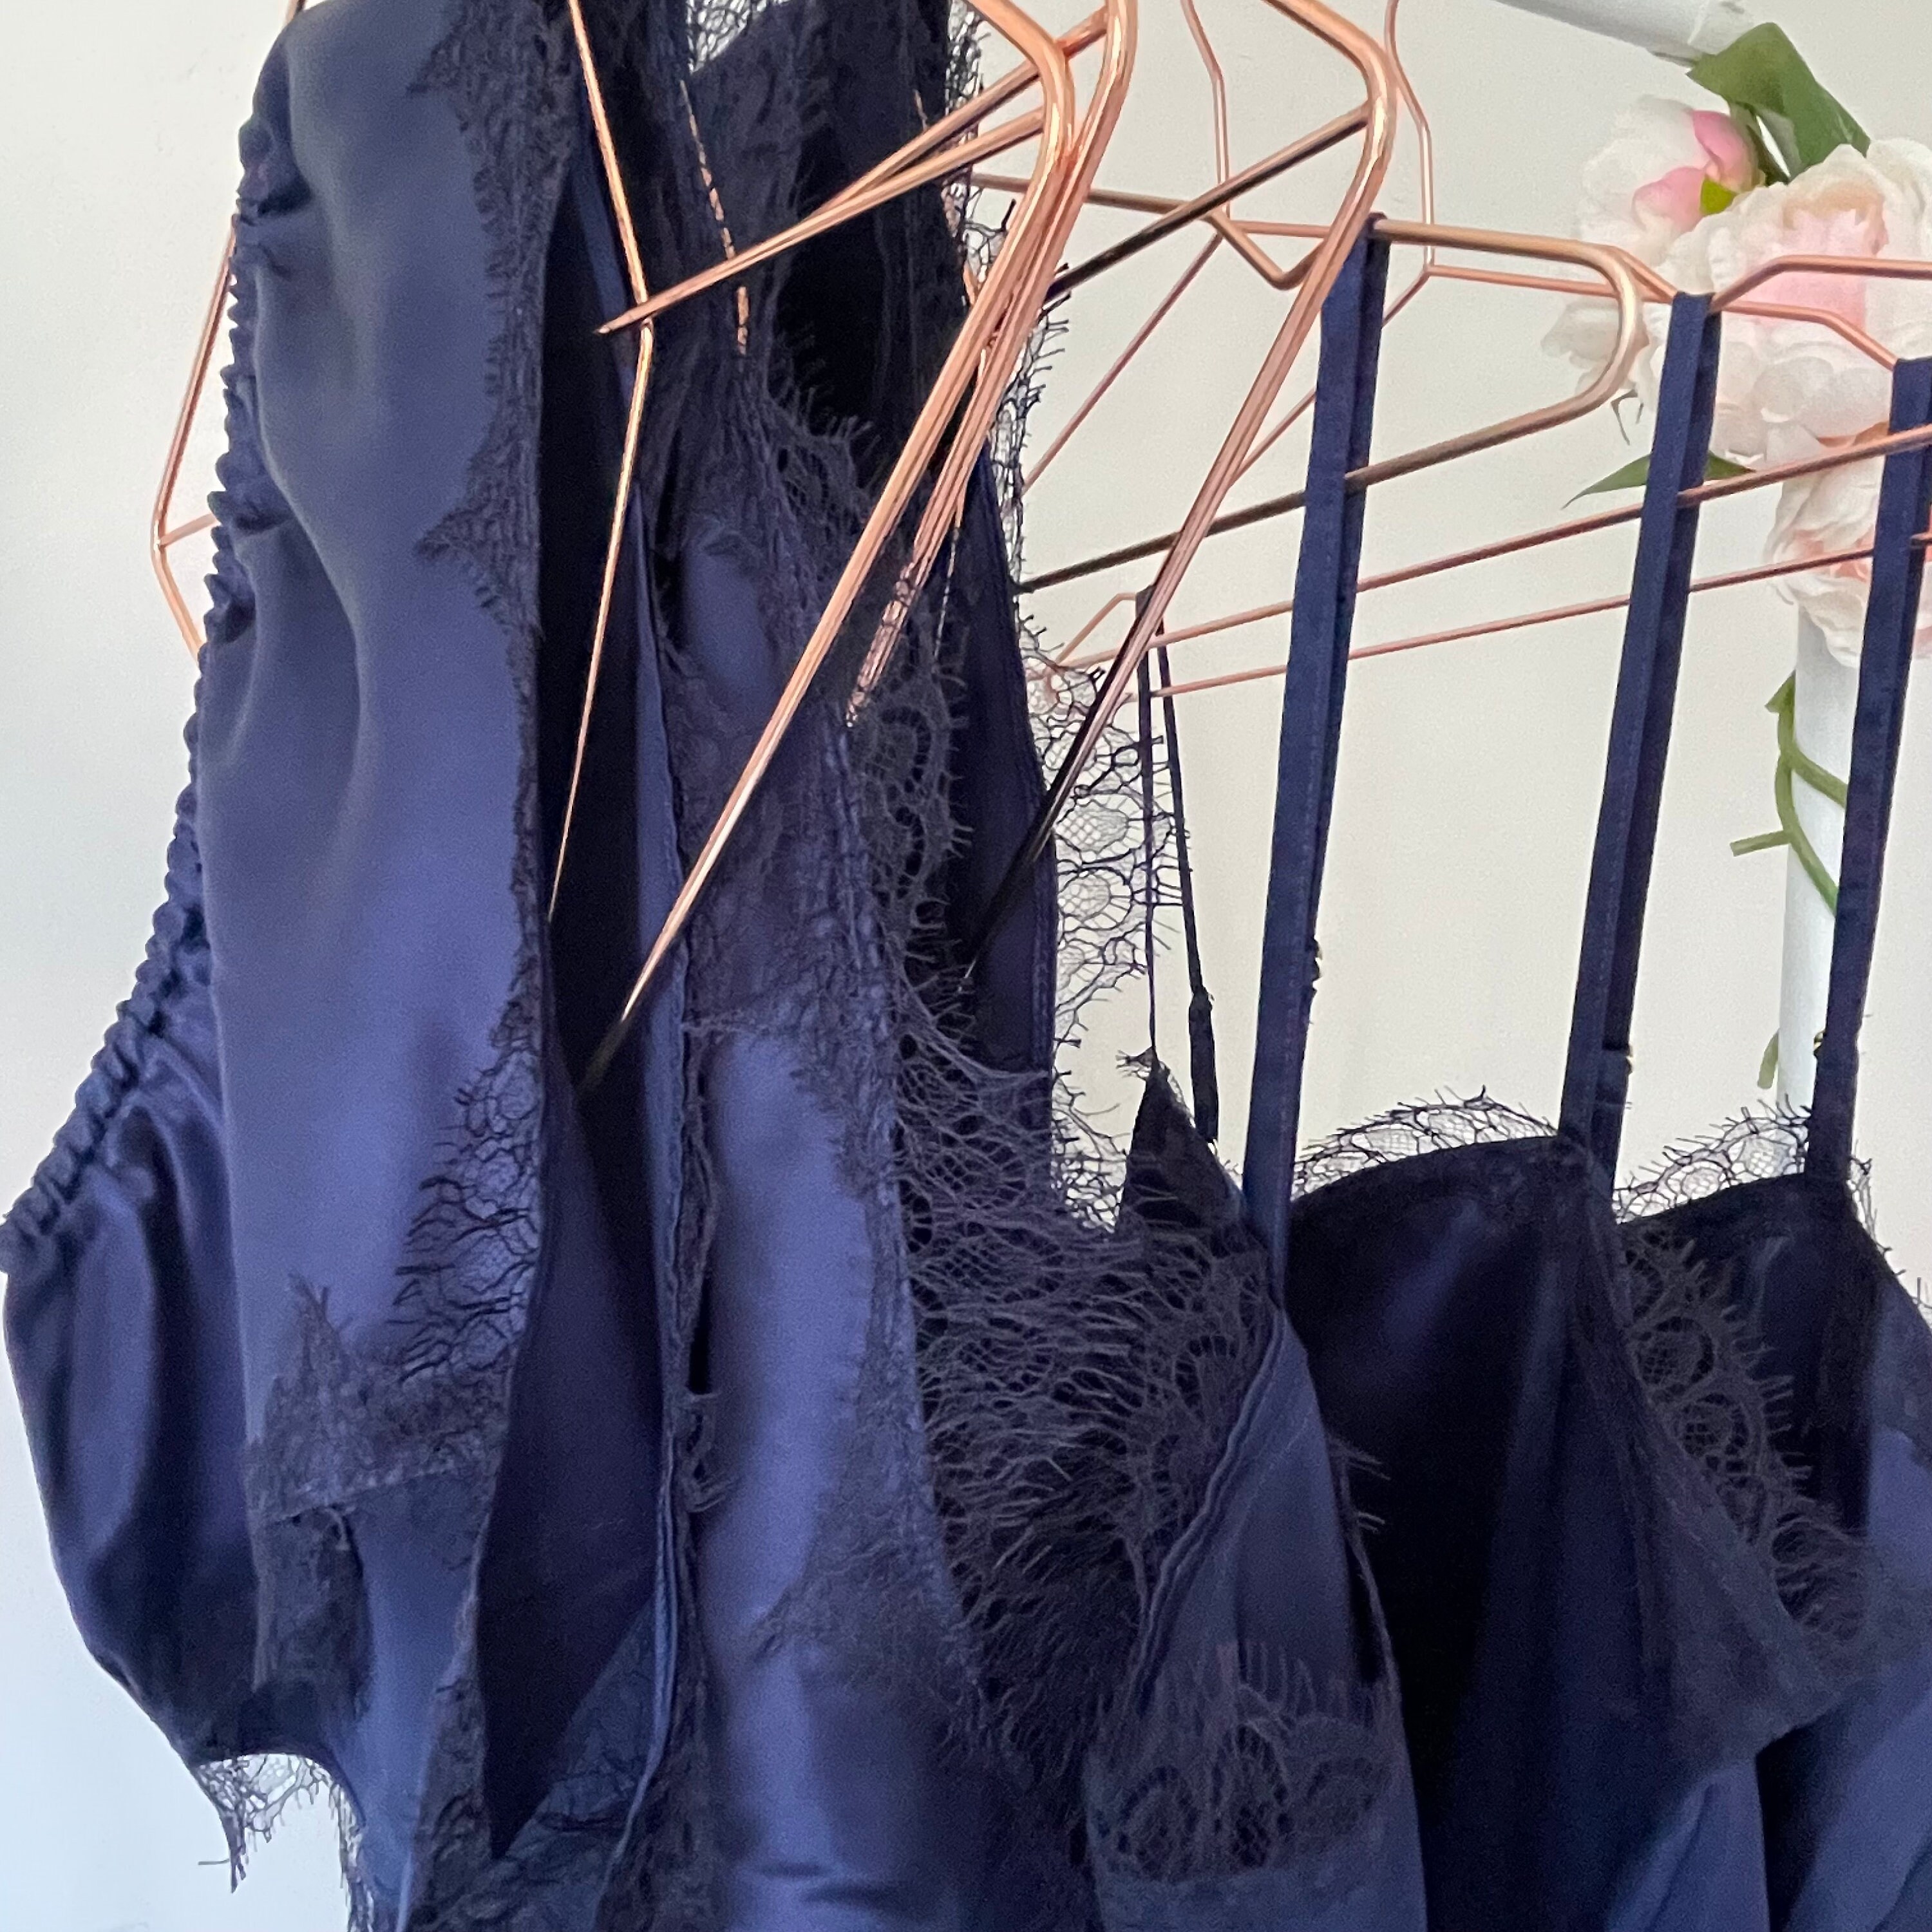 Natori BLACK Satin and Lace CAMISOLE Cami Top Underwear Sleepwear Lingerie  XS 